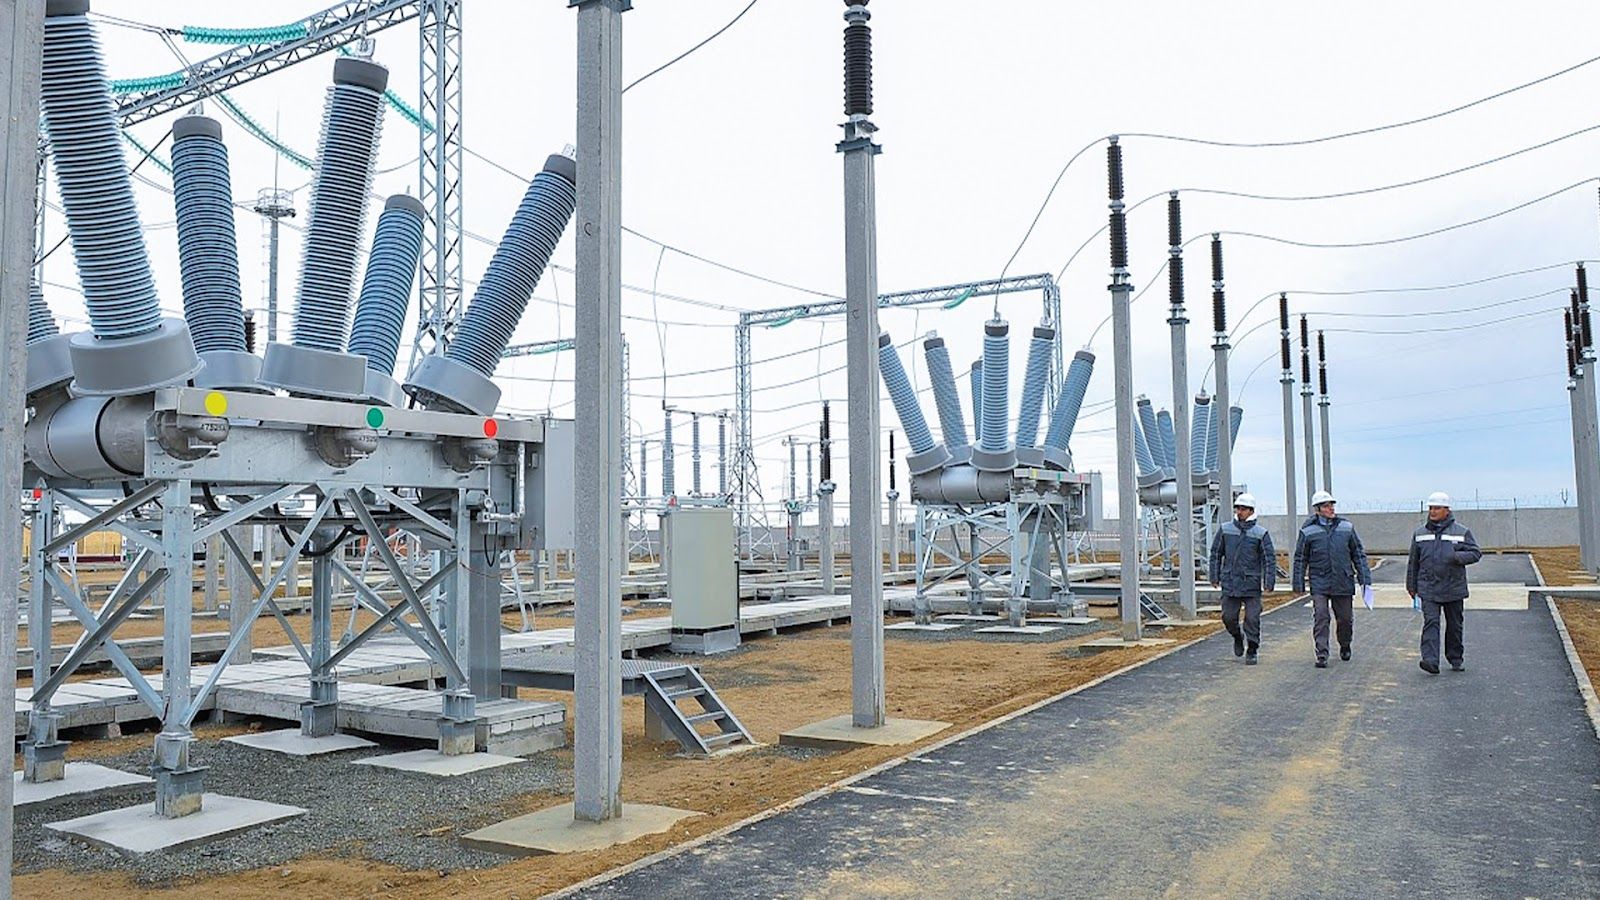 За 5 лет лет в Казахстане планируют ввести электроэнергетические мощности на 14 гигаватт 2656567 — Kapital.kz 